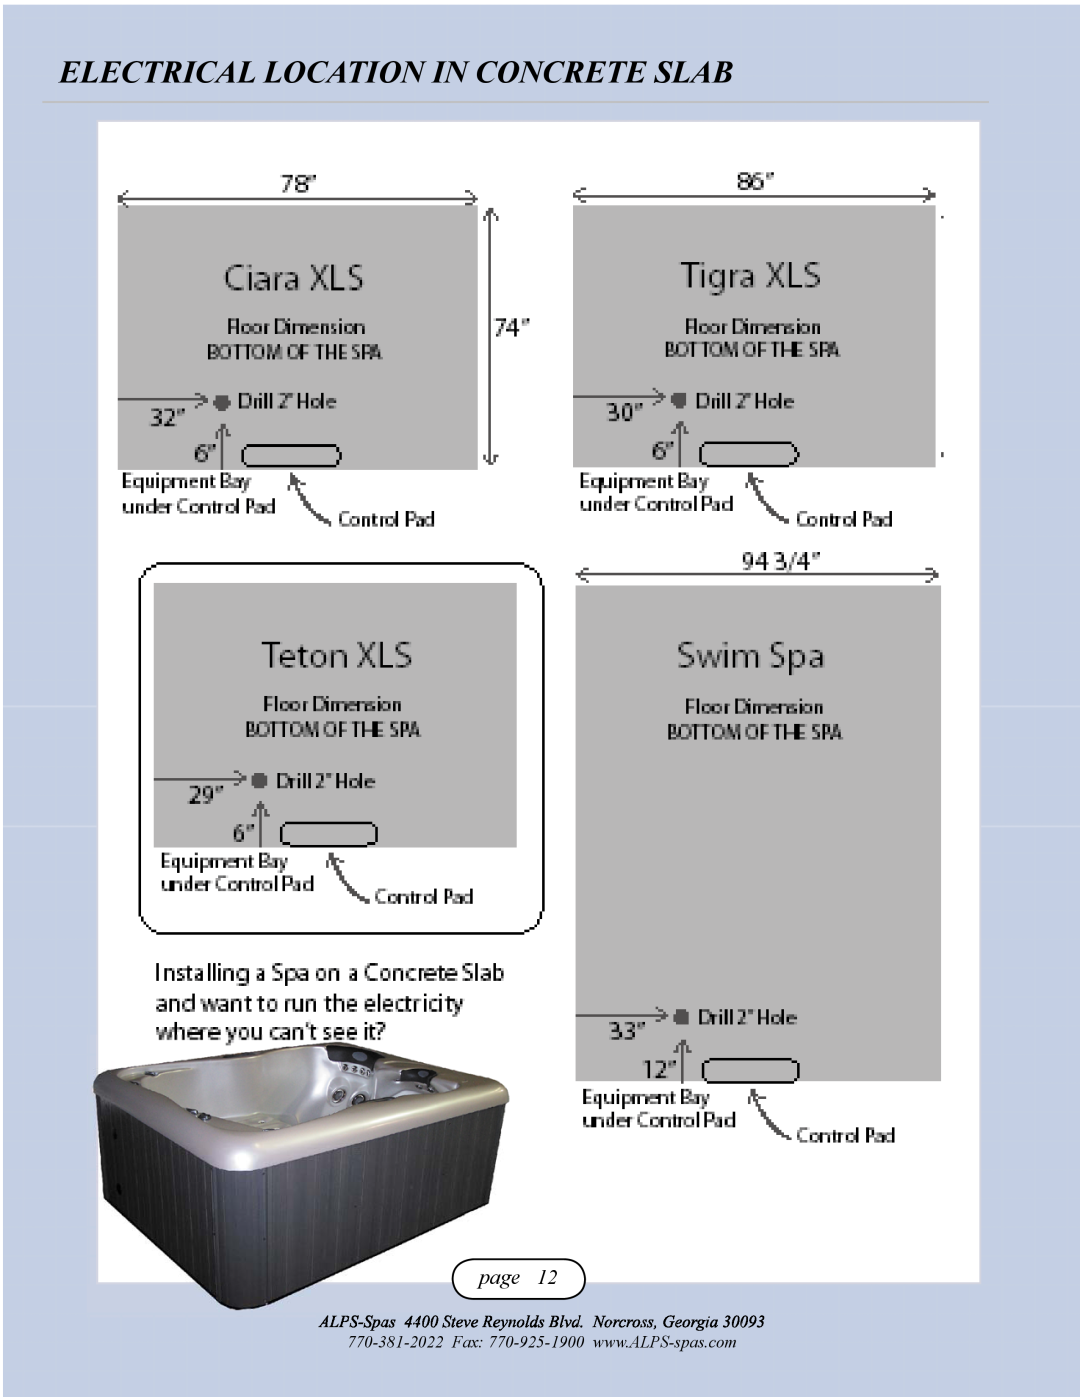 Alps Electric Ciara XLS, Teton XLS, Tigra XLS owner manual Electrical Location In Concrete Slab, page 